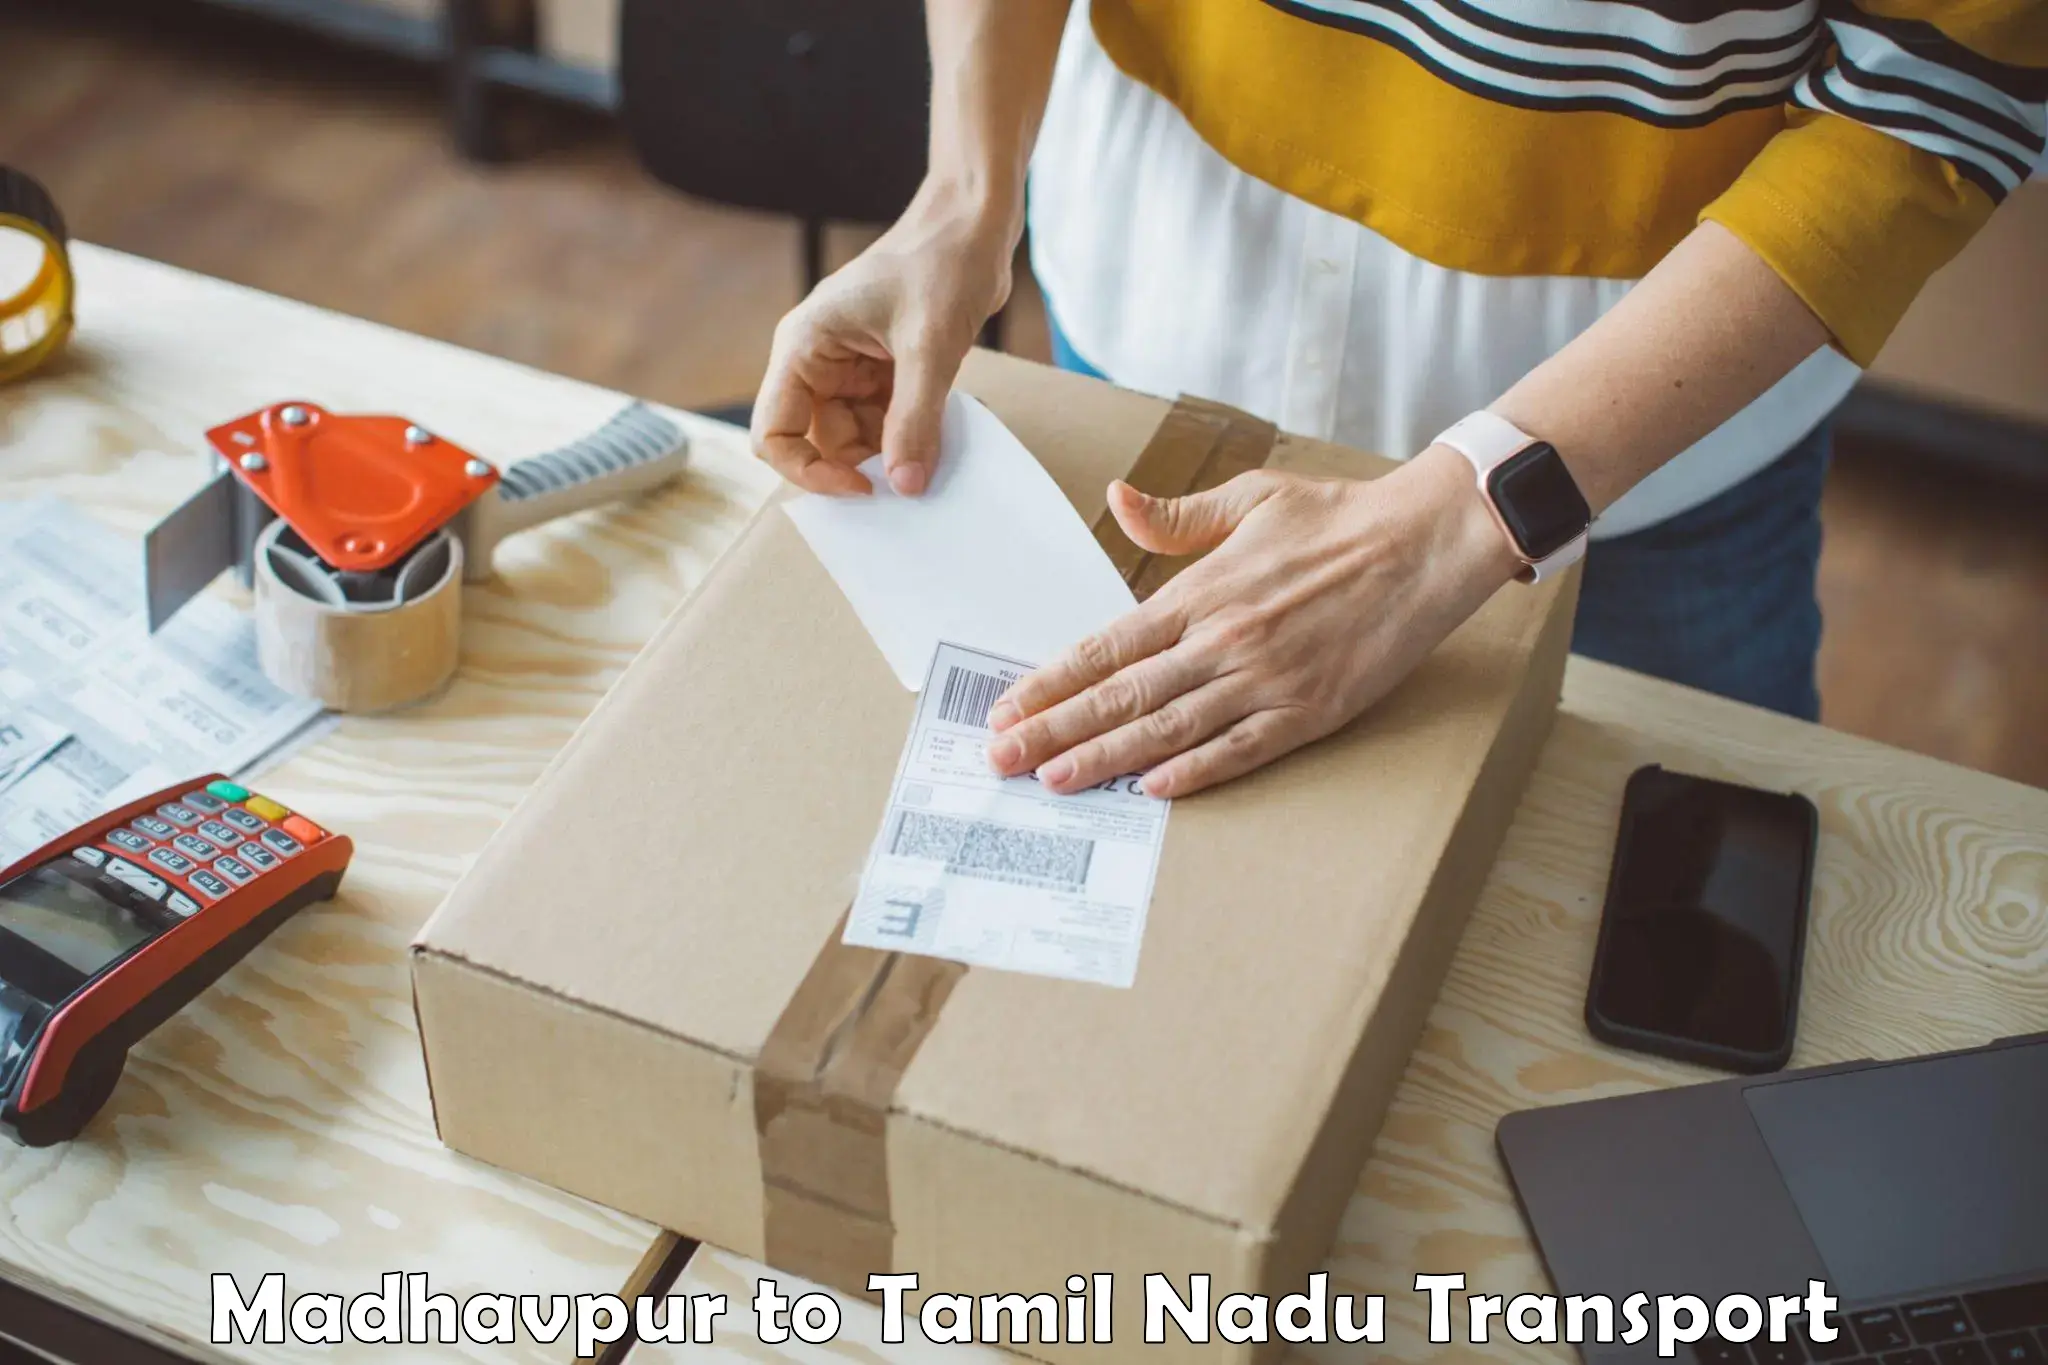 Shipping partner Madhavpur to Tiruvannamalai